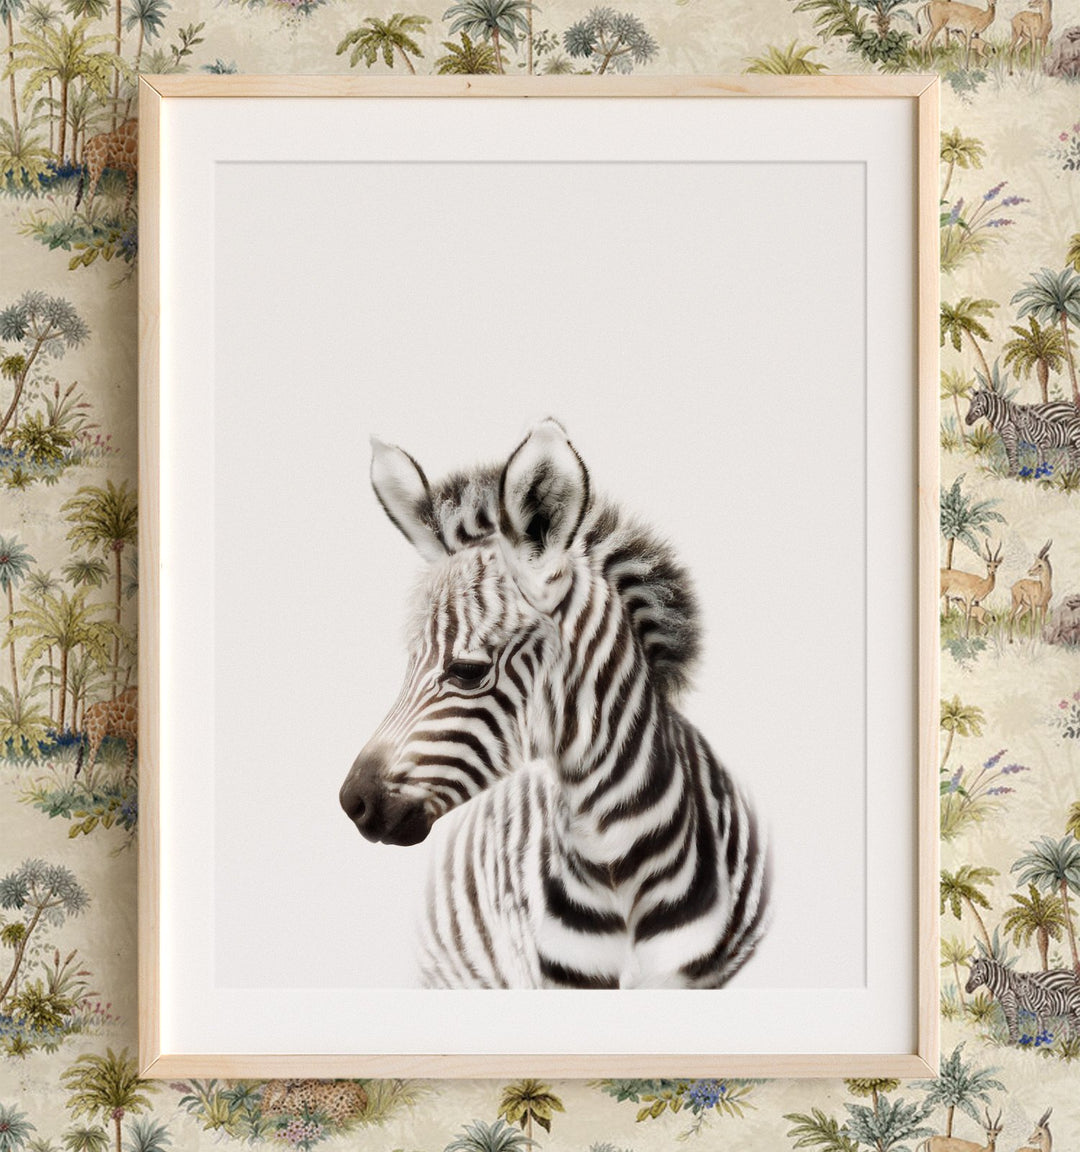 Portrait of a baby zebra - original nursery animal artwork from The Crown Prints